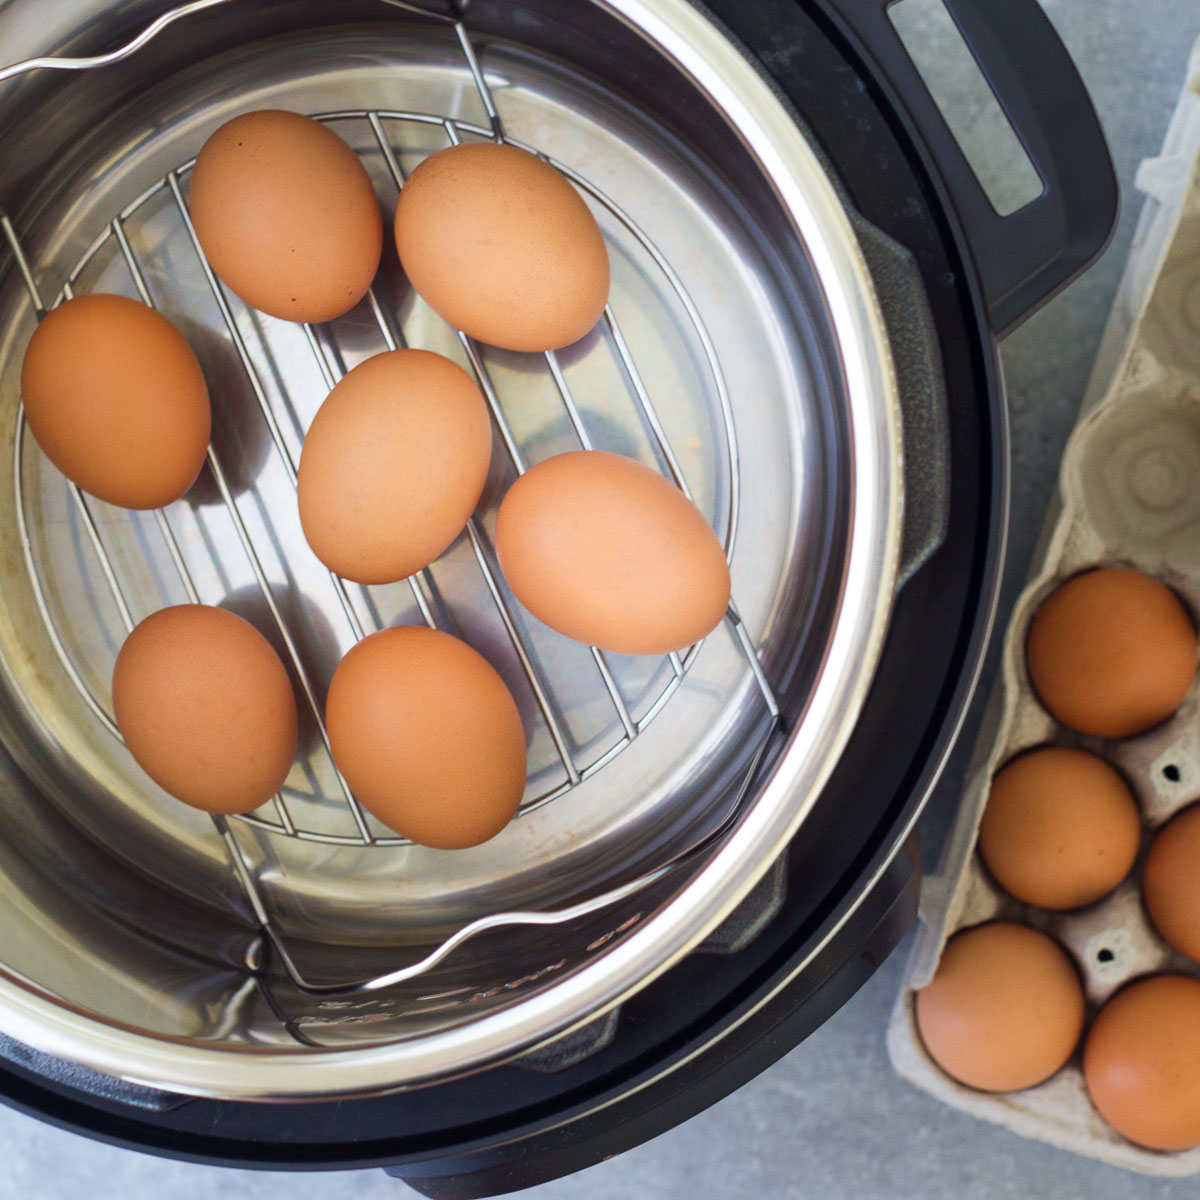 https://kristineskitchenblog.com/wp-content/uploads/2021/04/instant-pot-hard-boiled-eggs-1200-square-8521.jpg